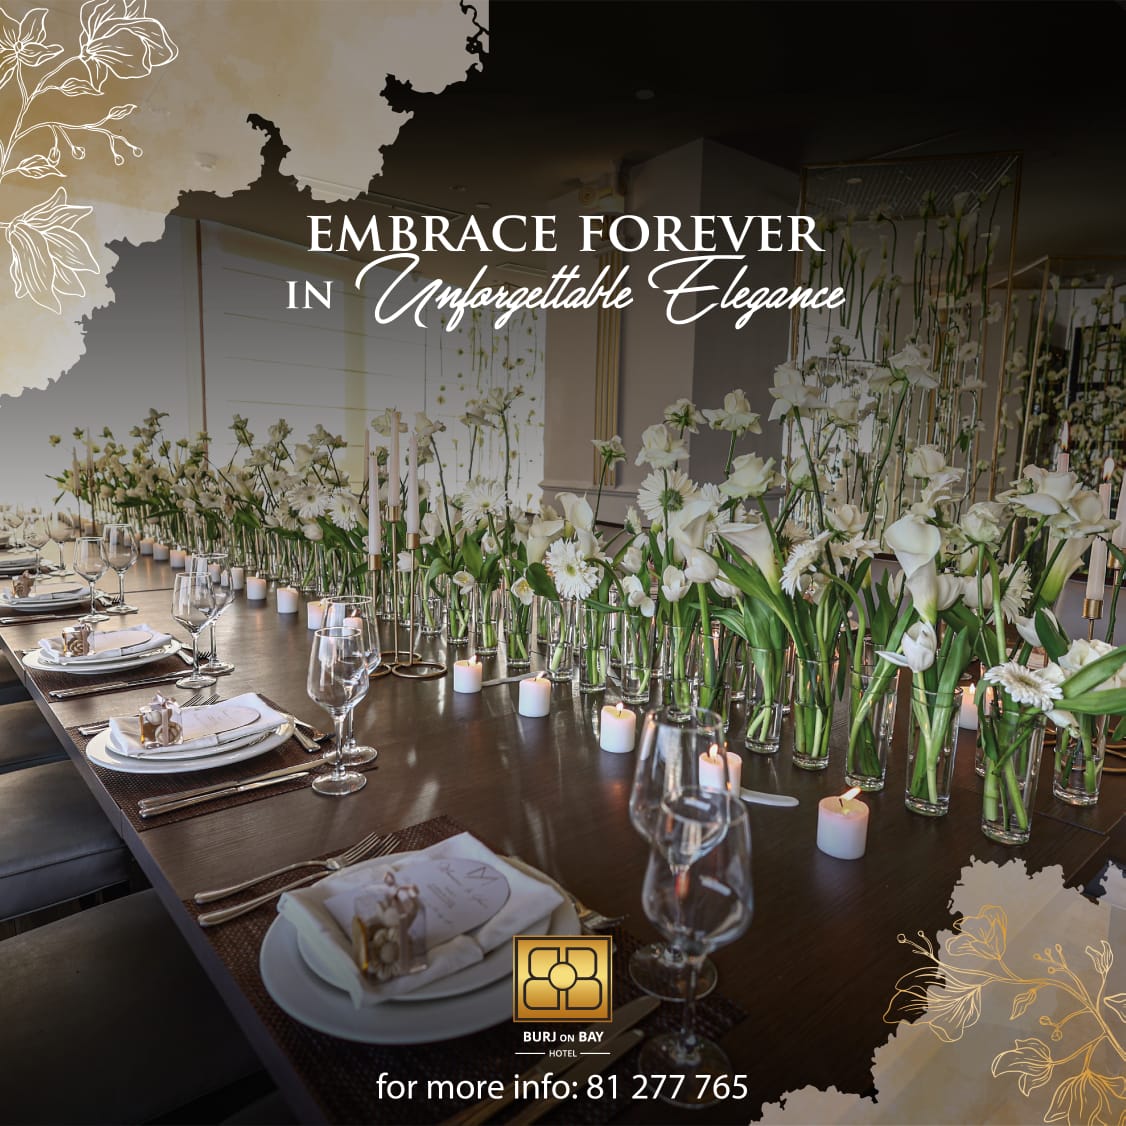 Where dreams become reality! Celebrate your love at Burj On Bay hotel where timeless charm meets unforgettable elegance.
For more info: 81277765
#weddings #WeddingVenue #WeddingSeason #Weddings2023 #BridesOf2023 #BrideAndGroom #BurjOnBayHotel #BurjOnBay #Lebanon